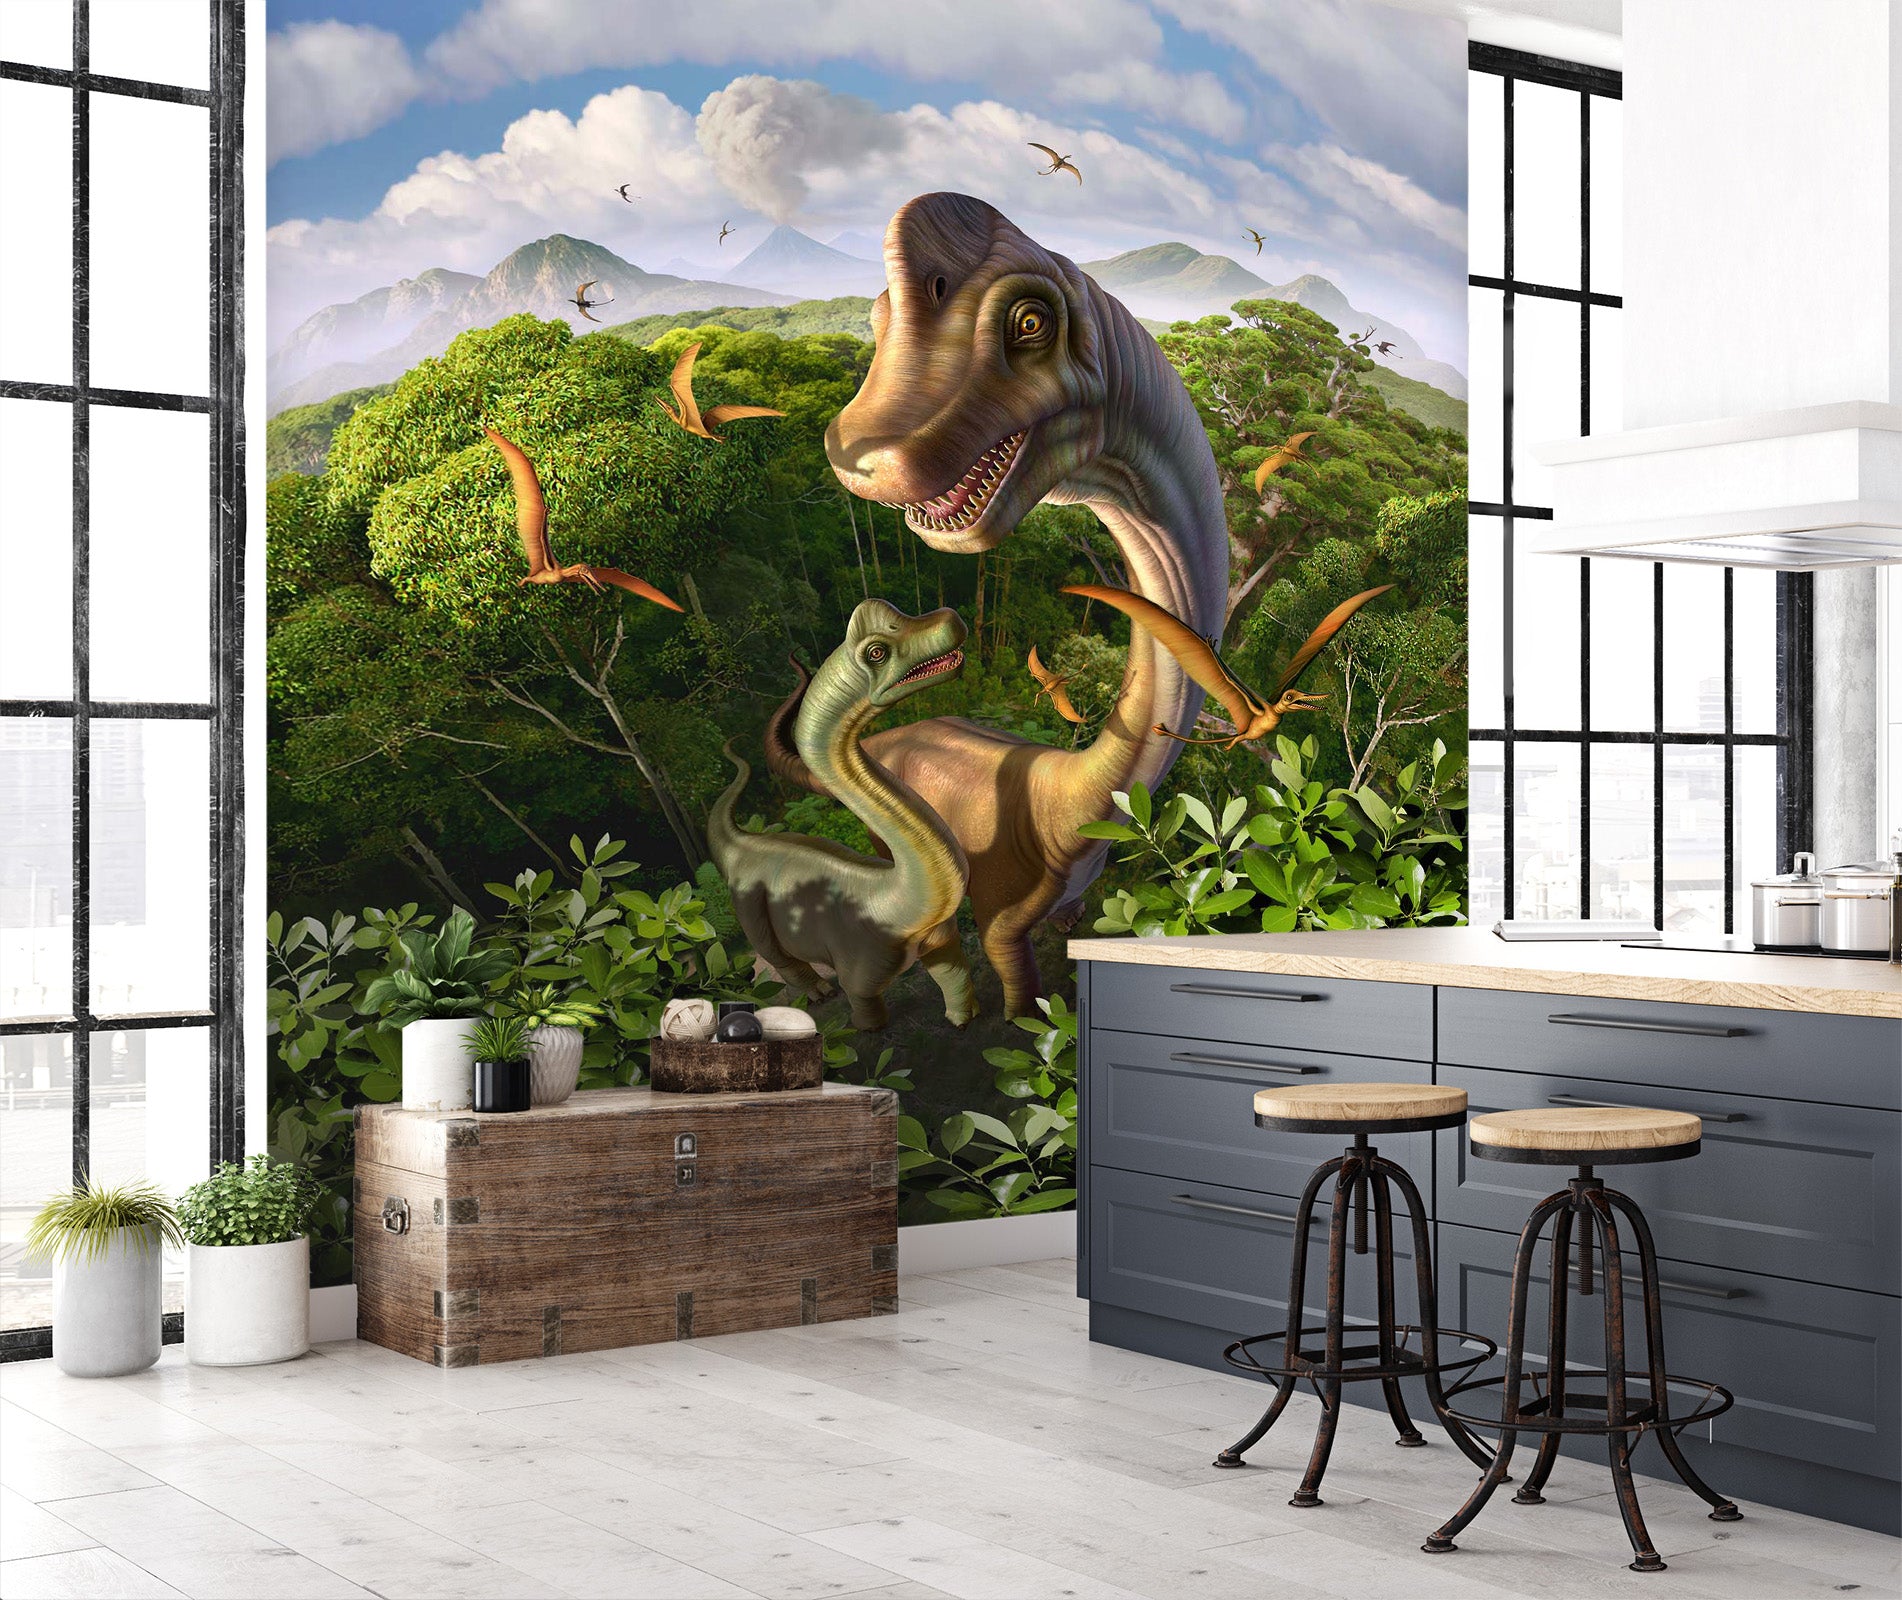 3D Brachiosaurus 1404 Jerry LoFaro Wall Mural Wall Murals